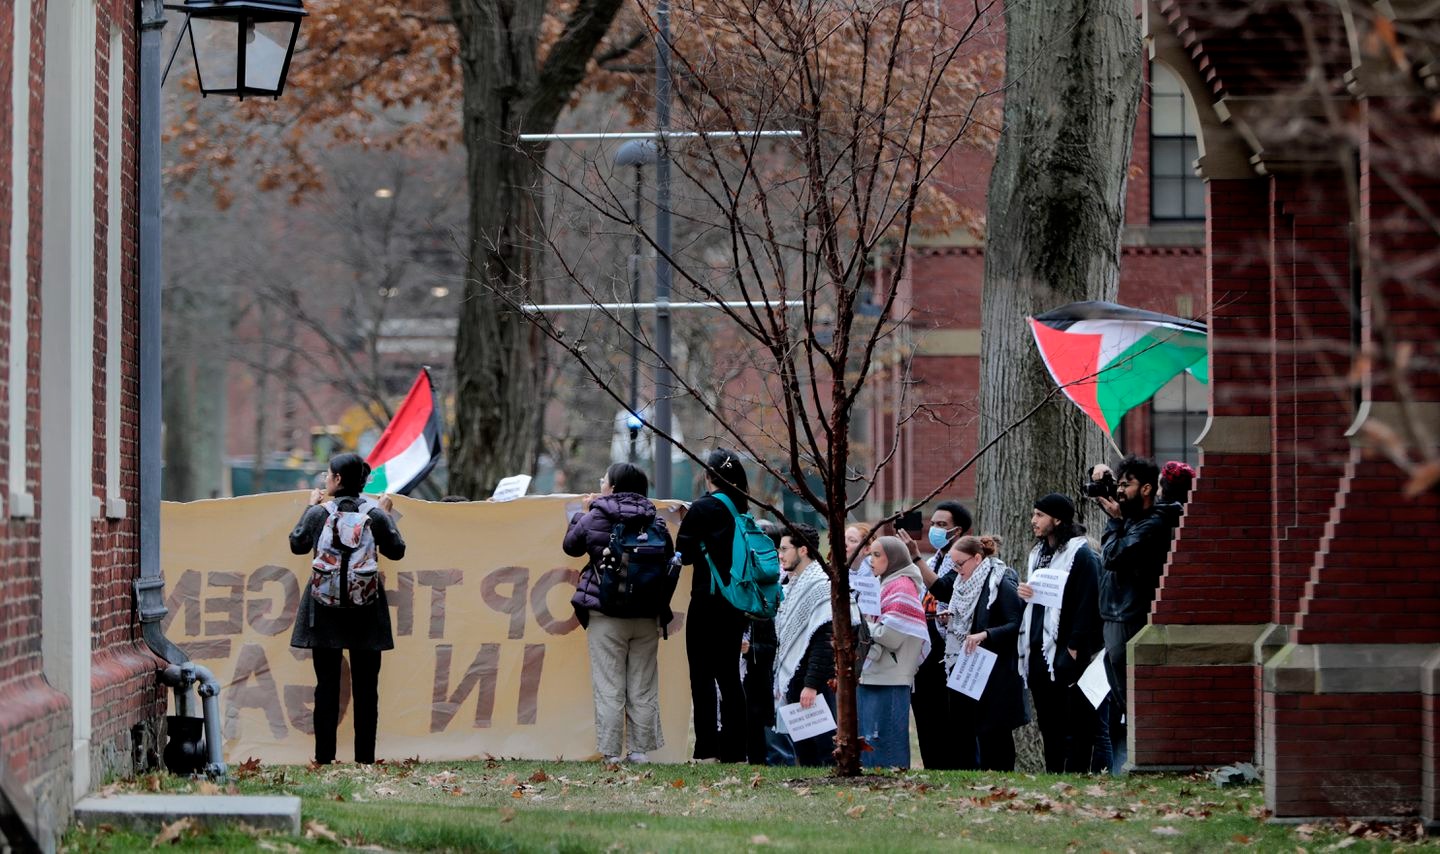 Education Dept. investigating alleged discrimination at Harvard against Muslim, Palestinian students